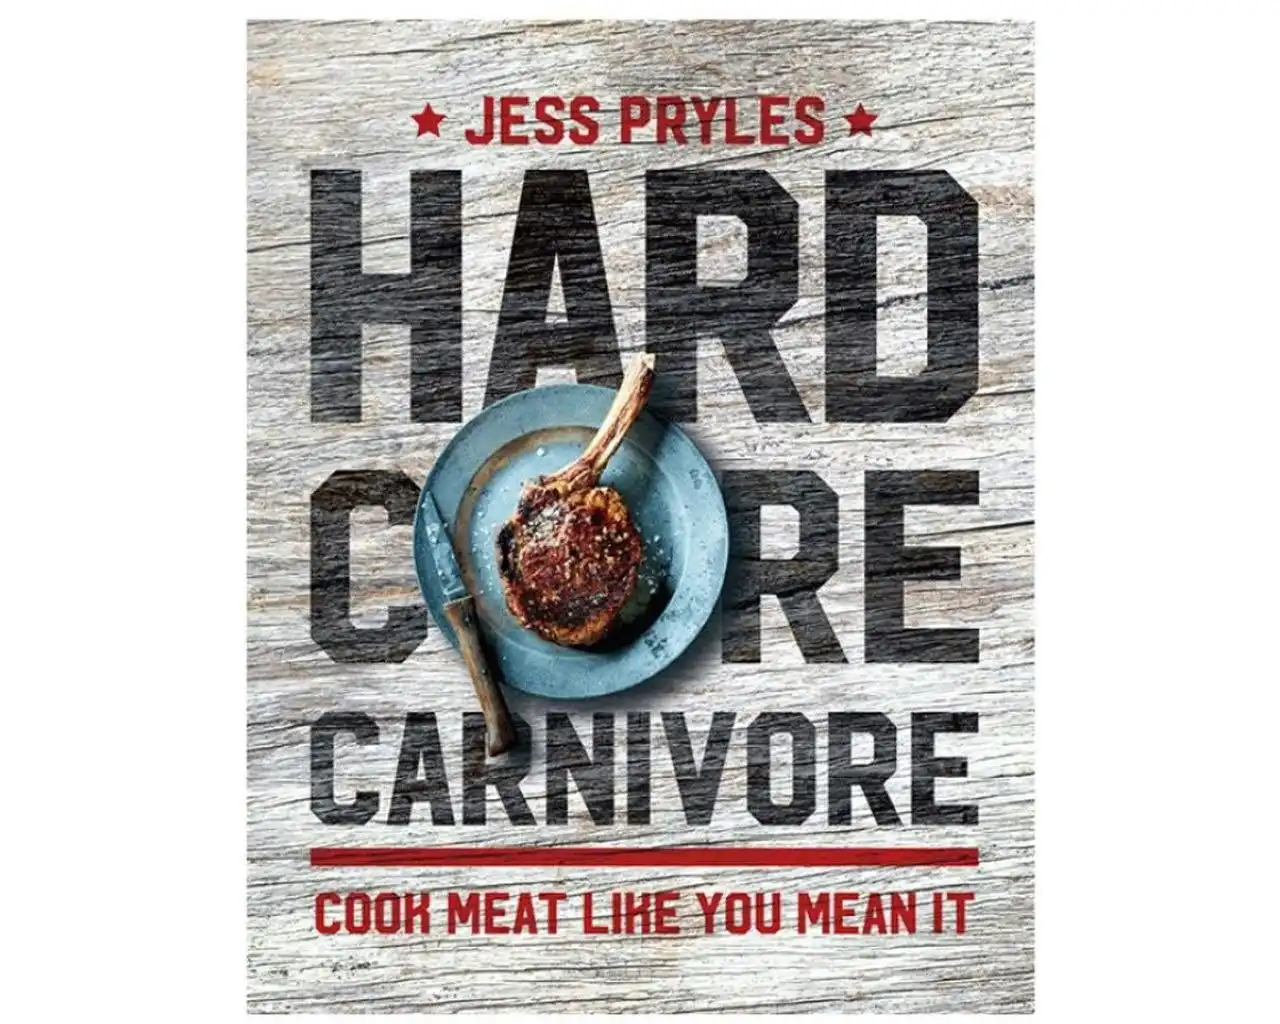 Hardcore Carnivore Cookbook By Jess Pryles